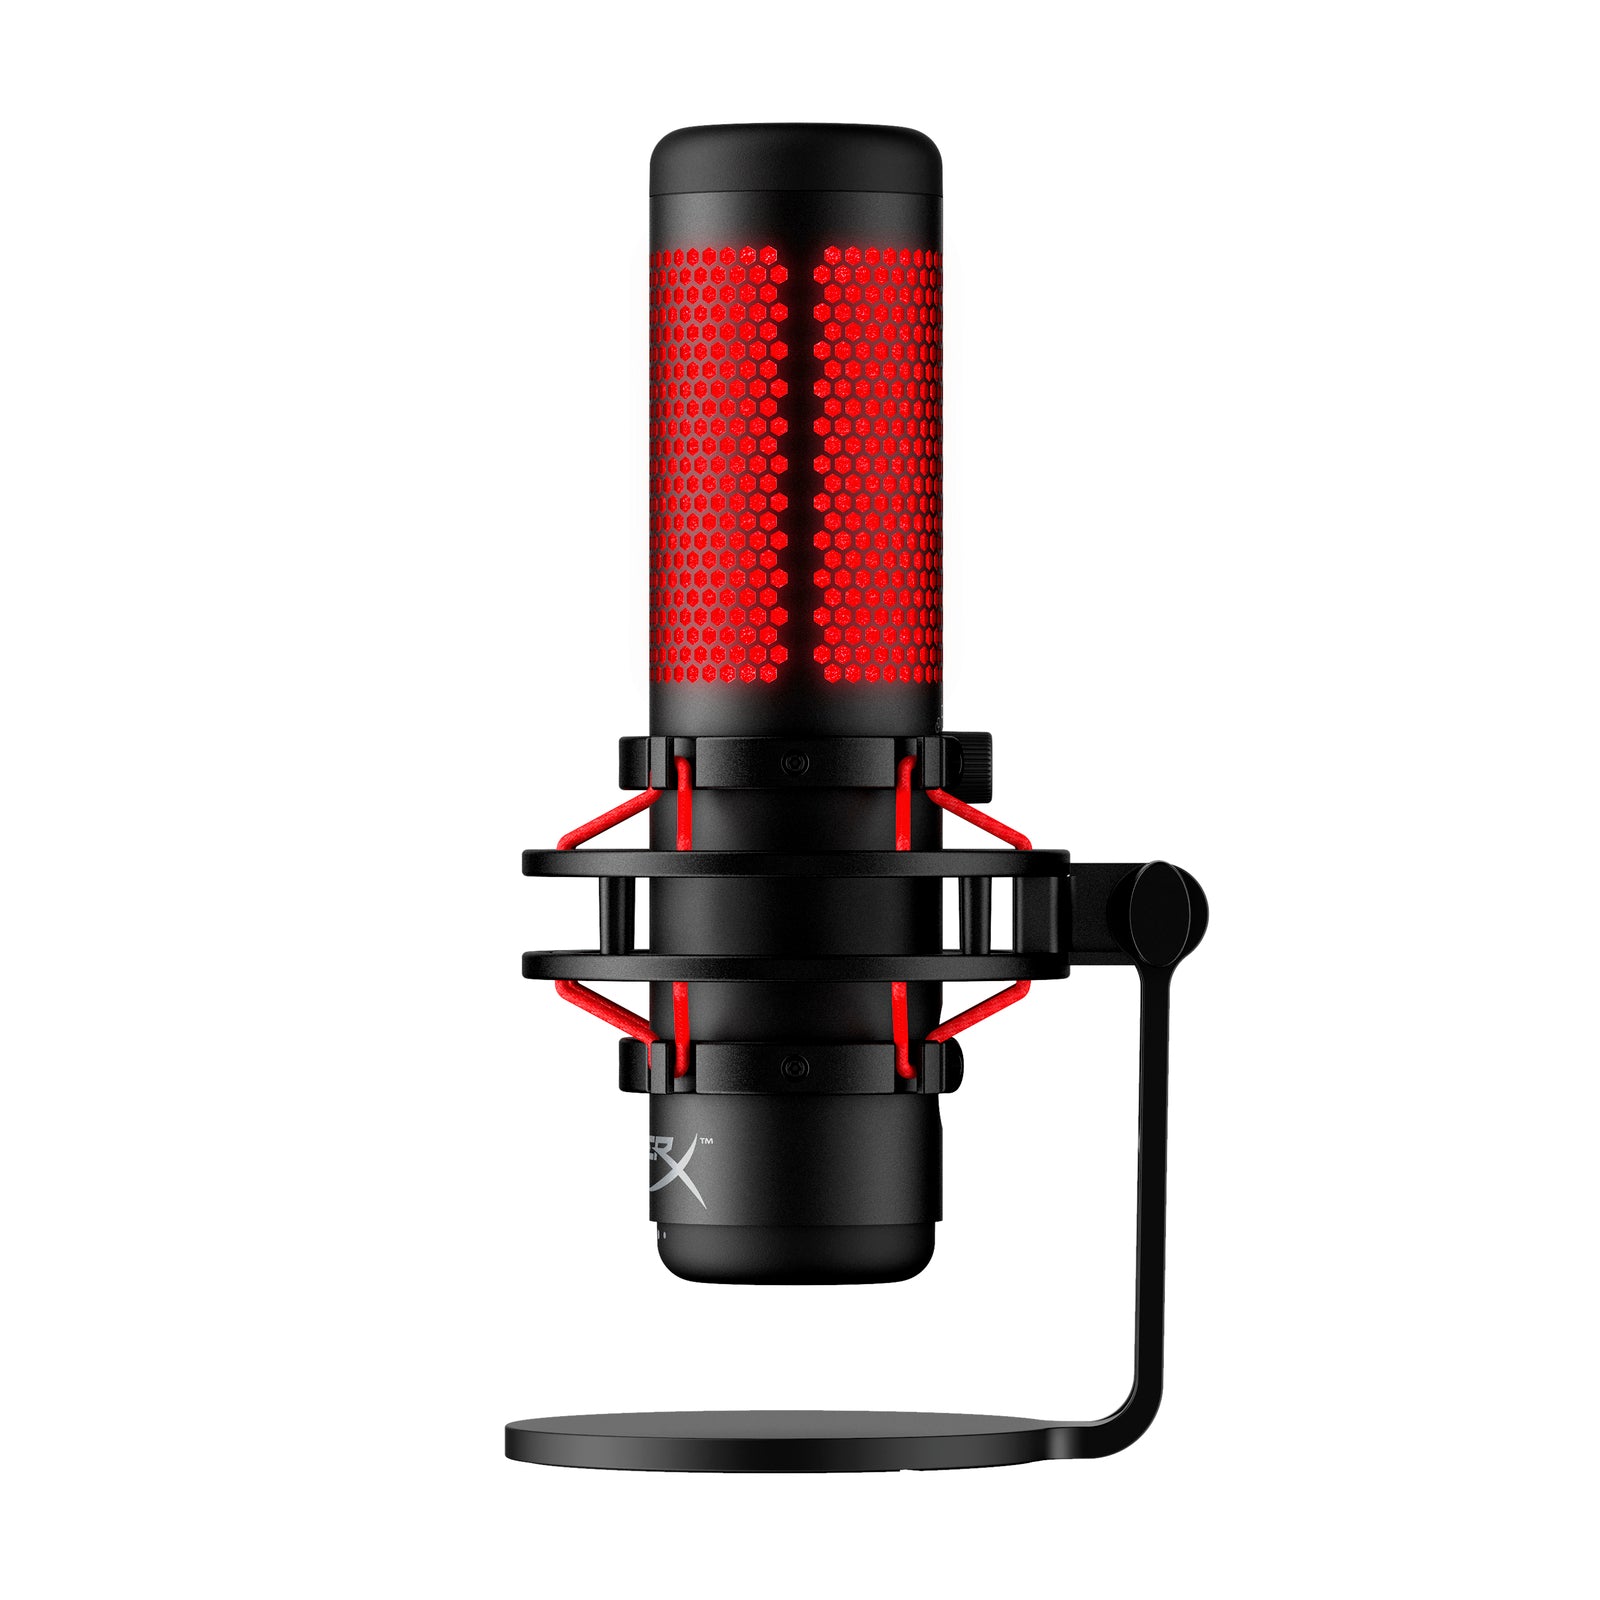 HyperX QuadCast - Microphone